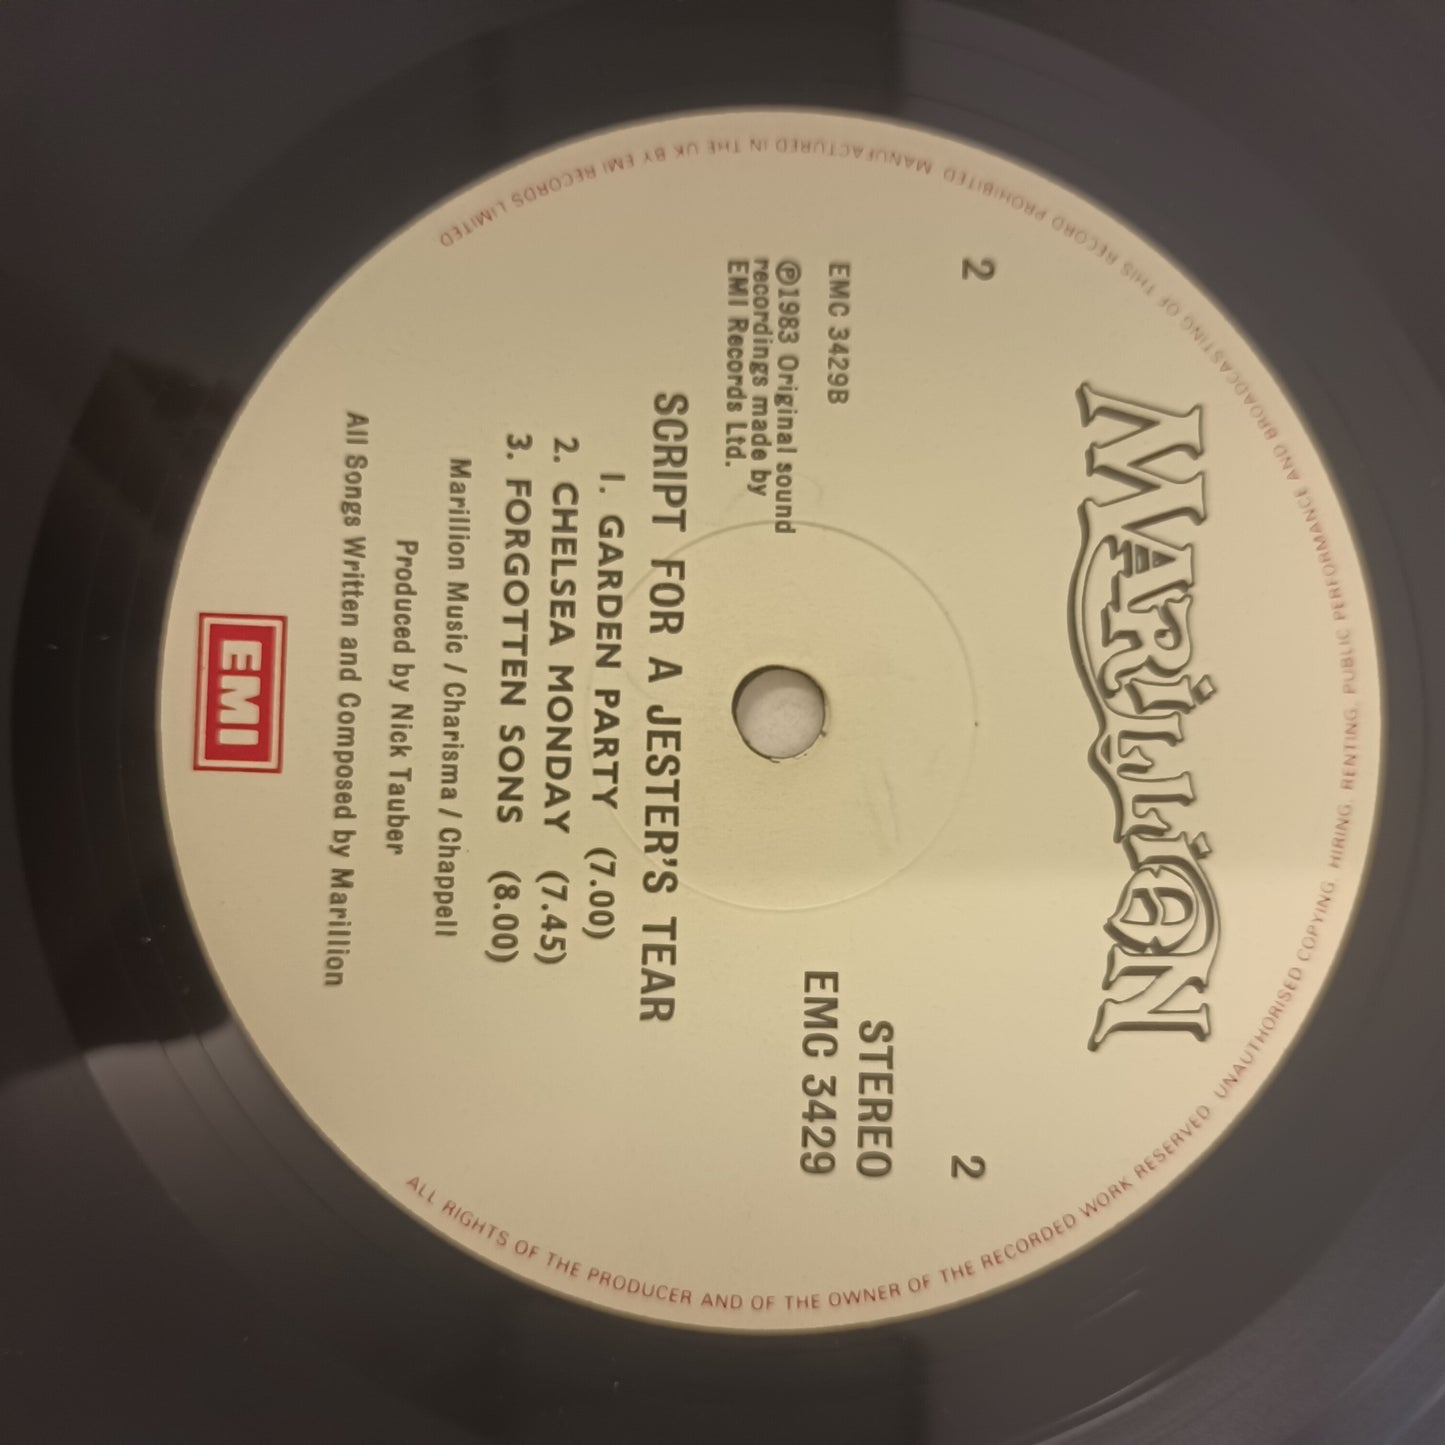 Marillion Script For A Jesters Tear 12" Gatefold Vinyl EMC 3429